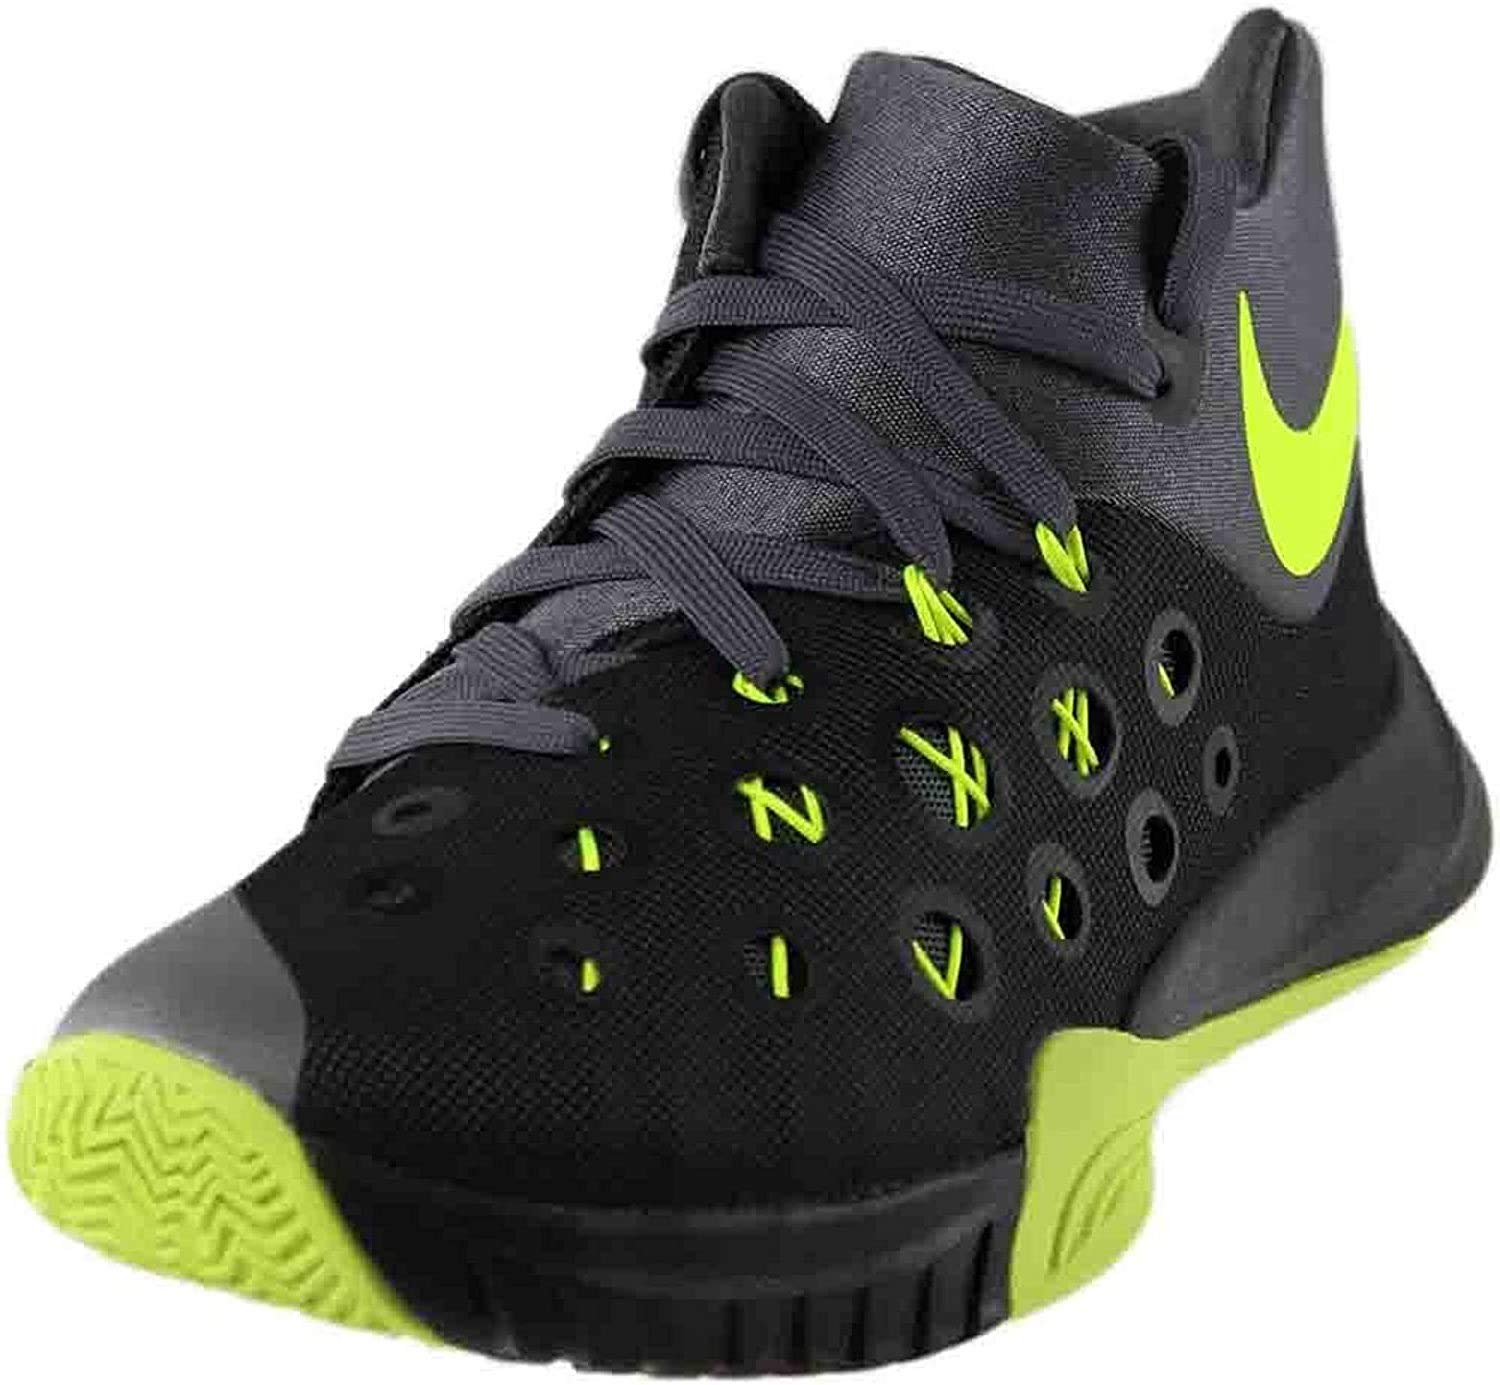 Nike Men's Zoom Hyperquickness 2015 Basketball Shoe (4 M US, Black) - image 1 of 5